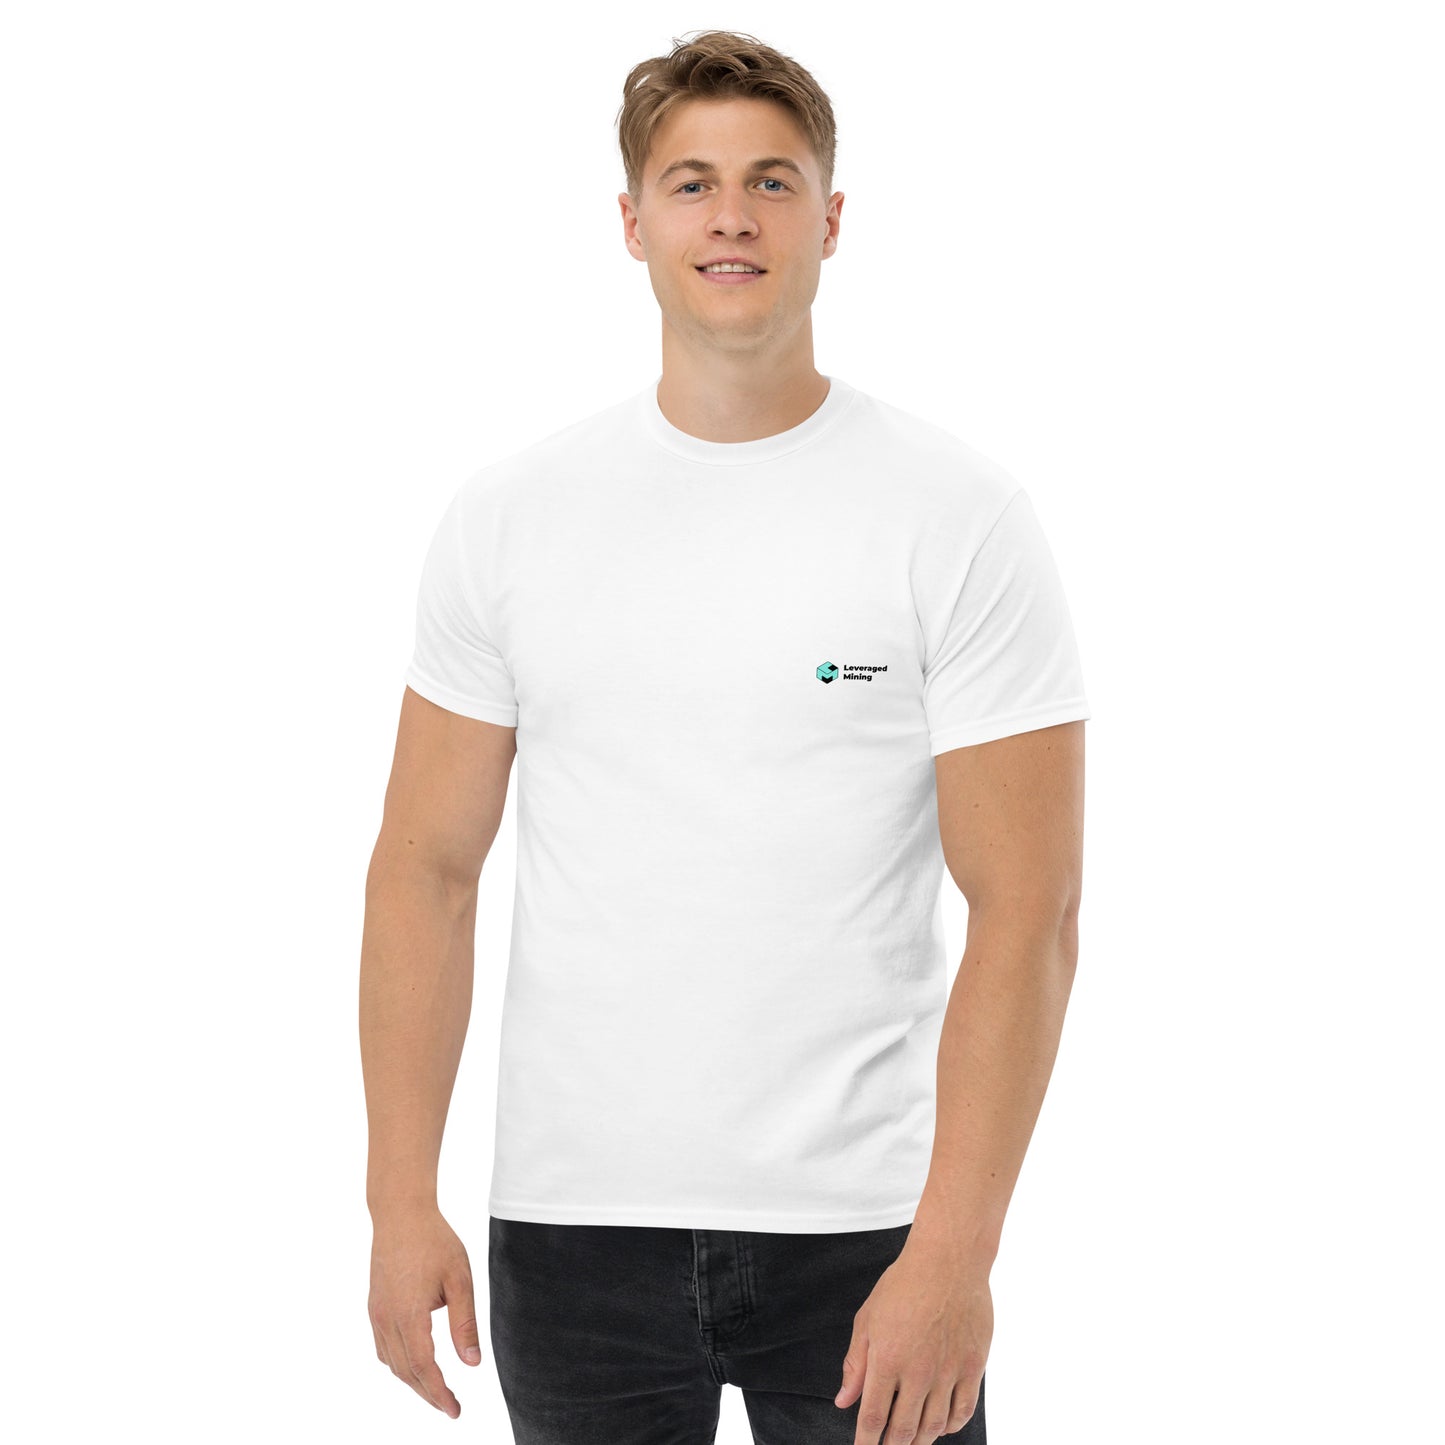 Leveraged Mining Men's Classic T-Shirt